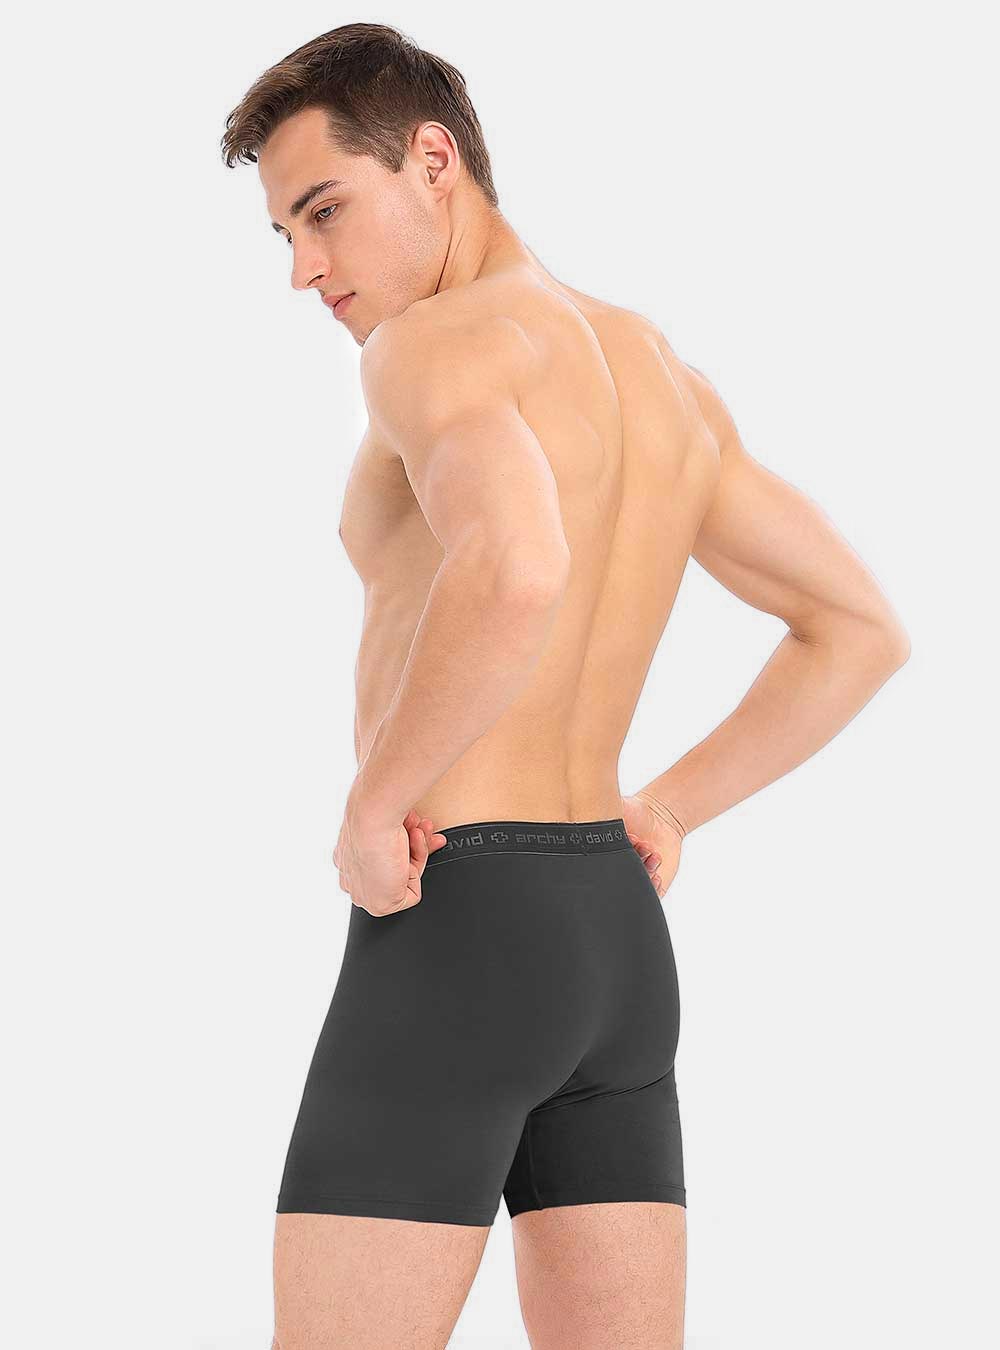 DAVID ARCHY Men's Dual Pouch Underwear Micro Modal Trunks - Import It All